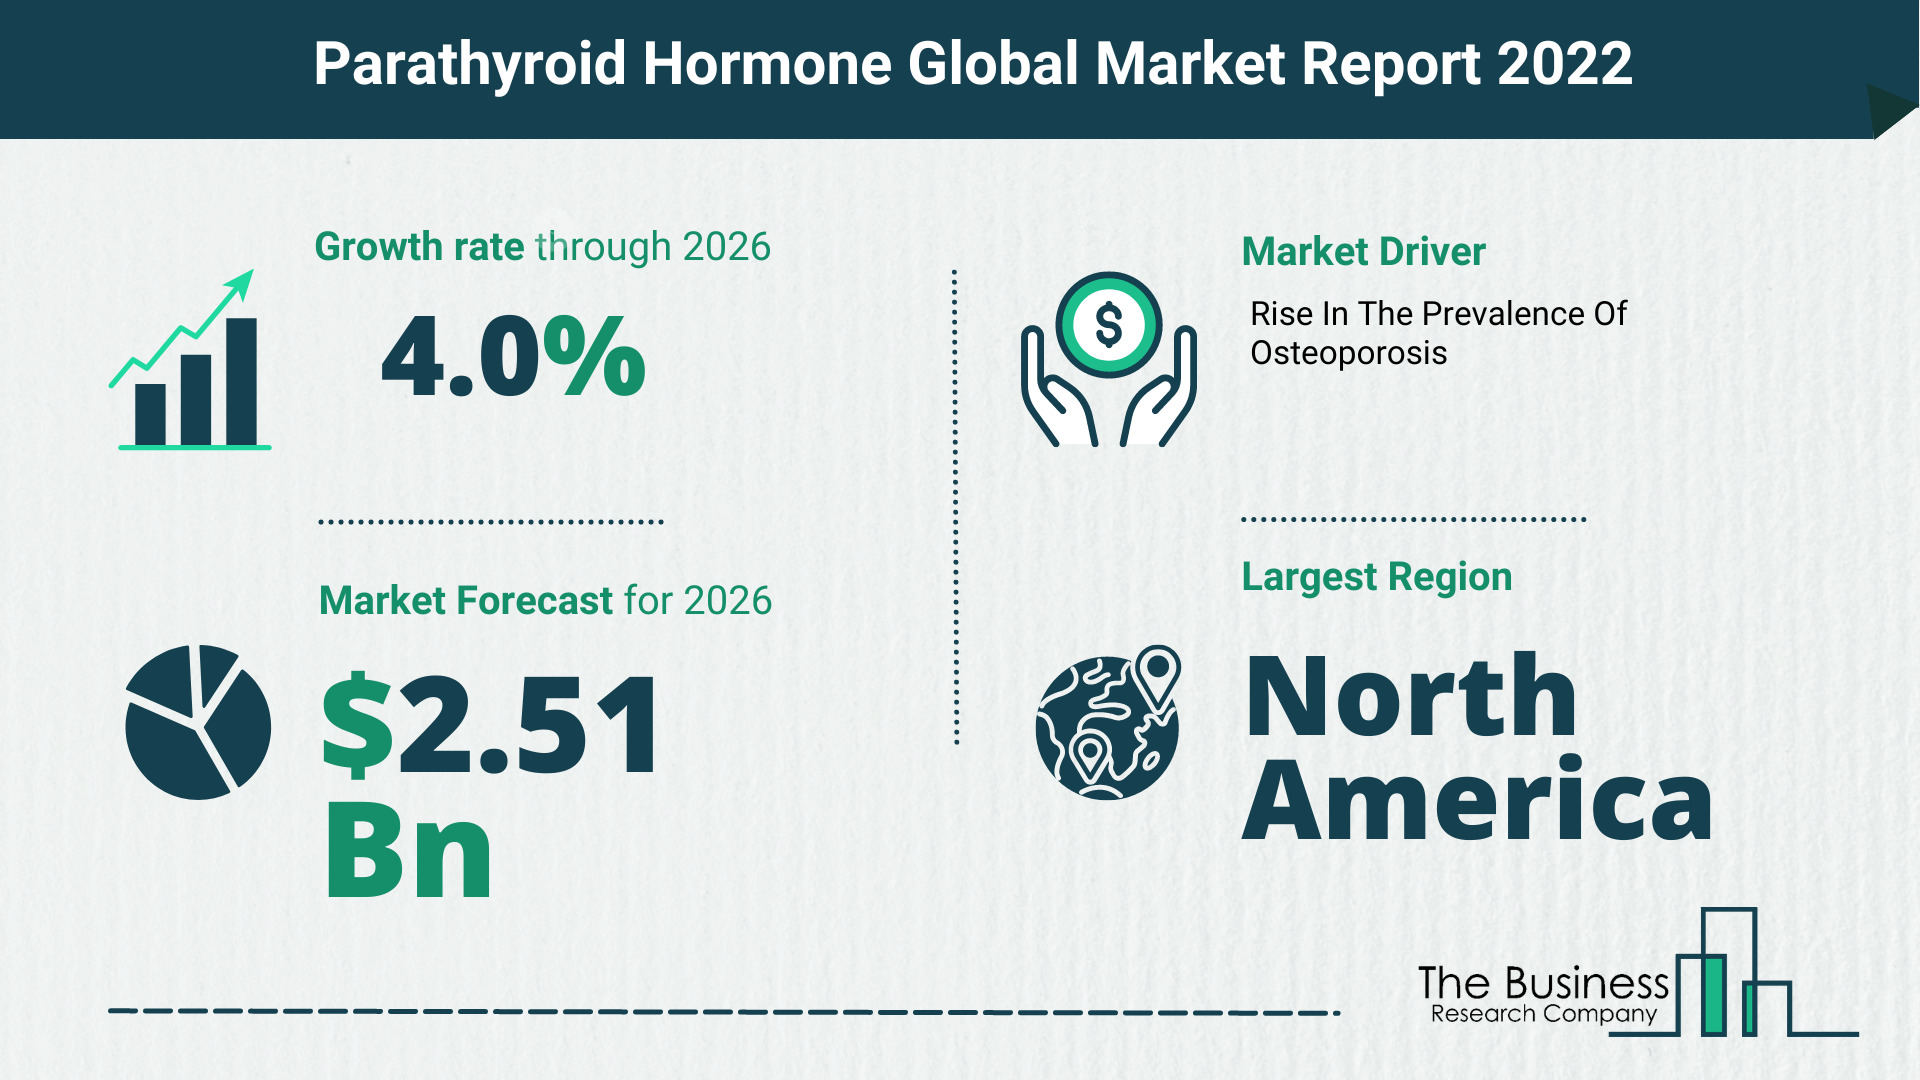 Global Parathyroid Hormone Market Size